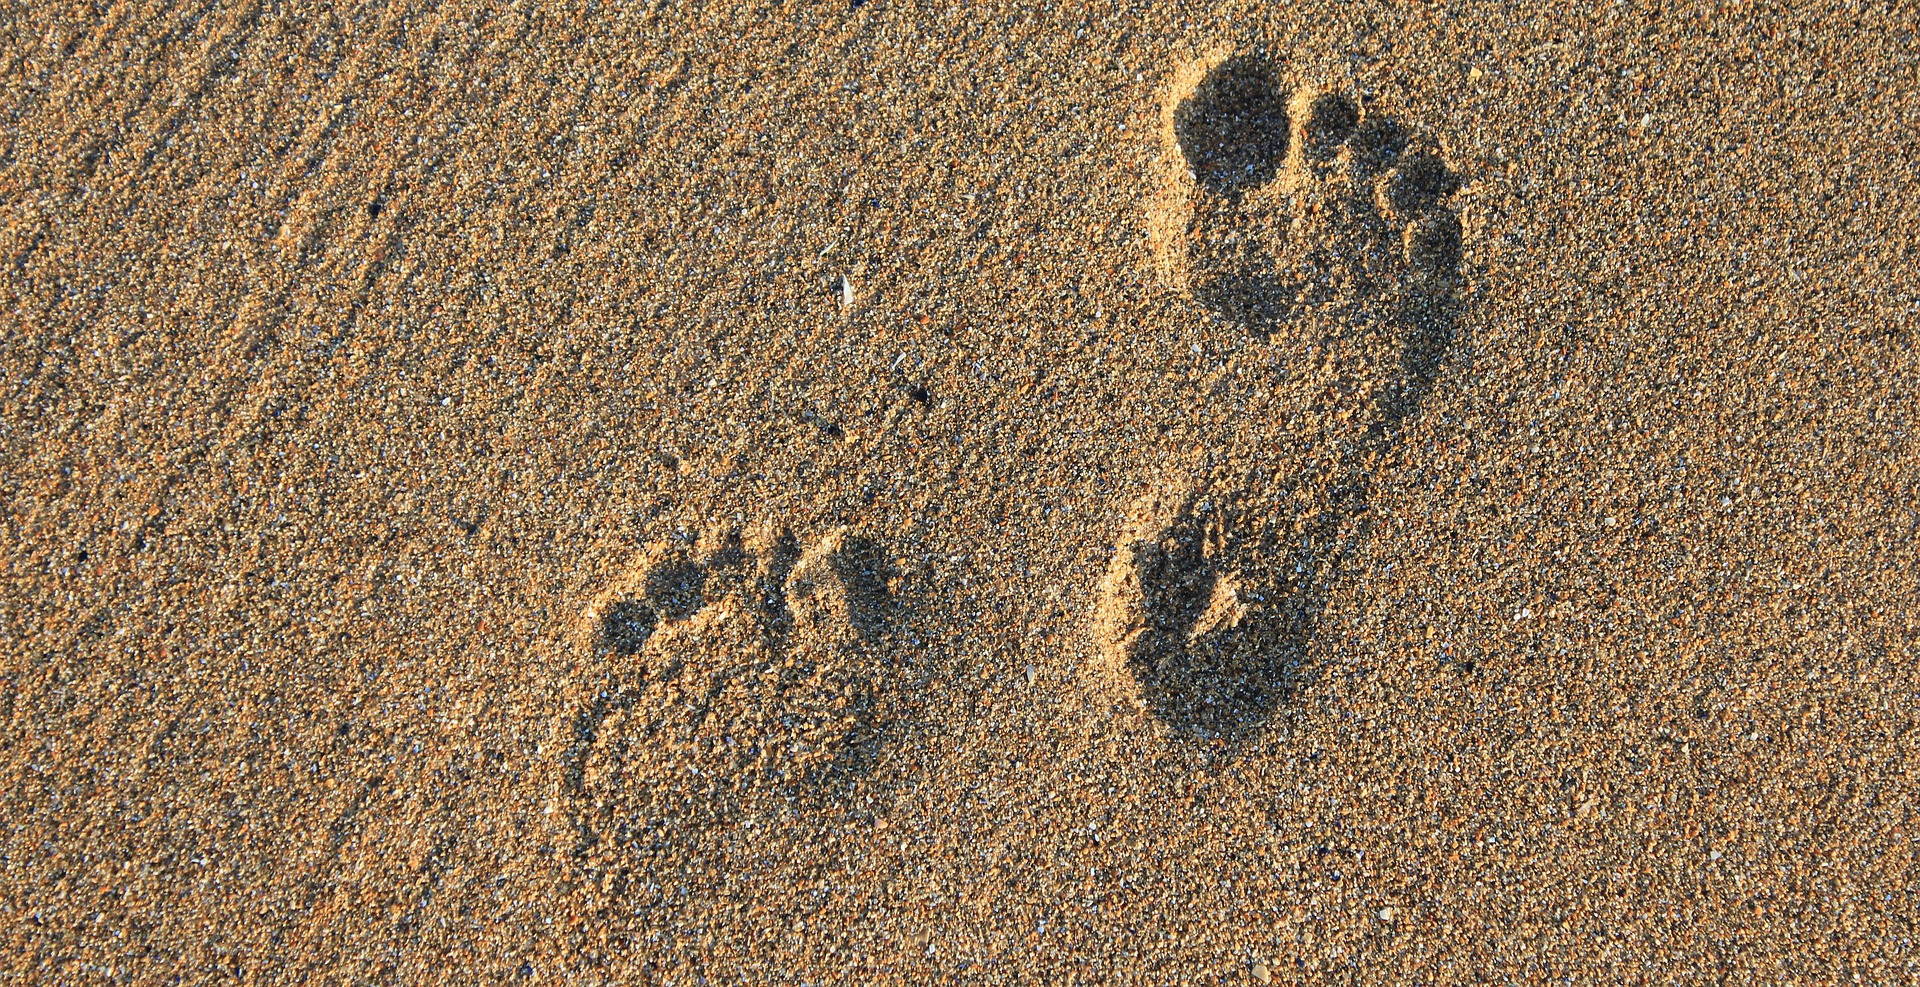 footprint-2353510_1920